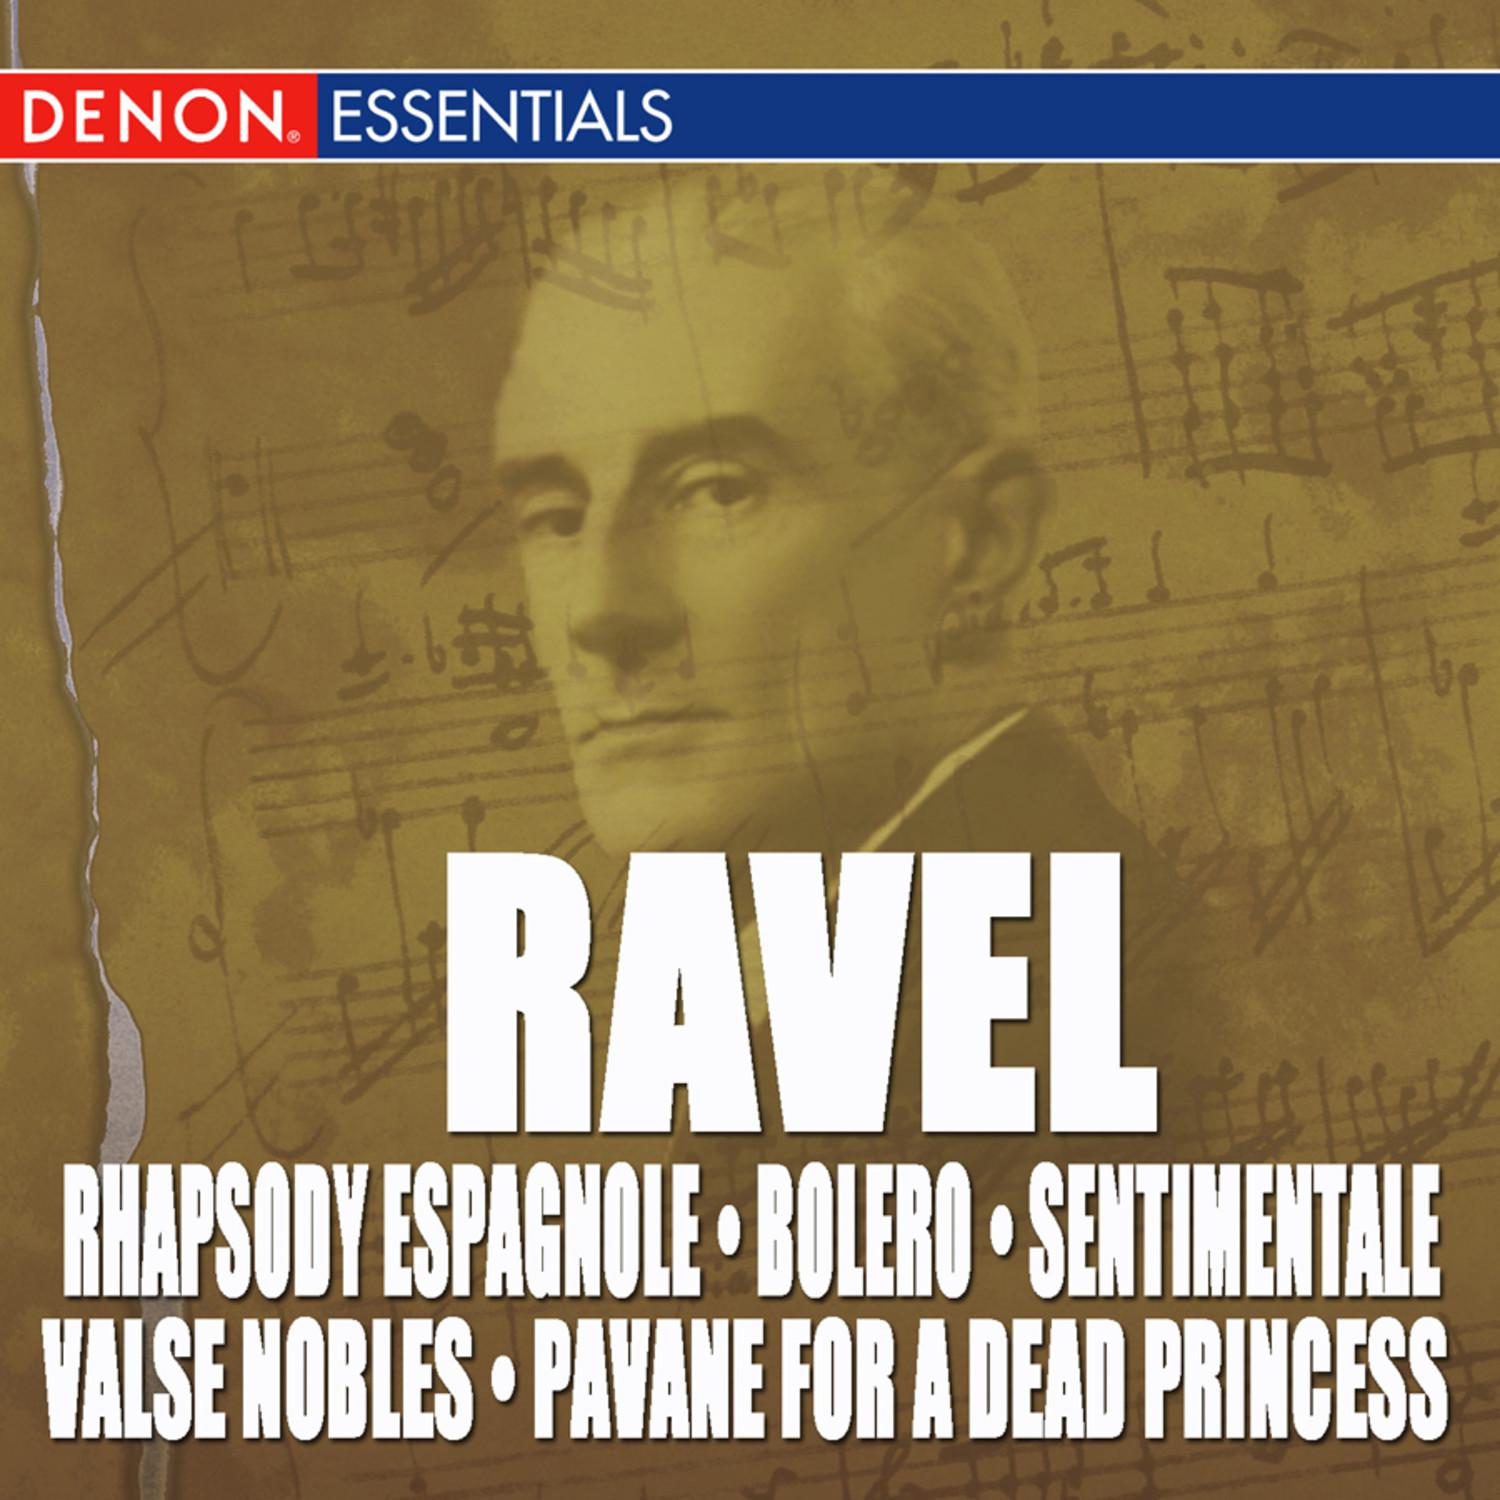 Ravel: Rhapsody Espagnole, Bolero, Pavane & Valse Nobles and Sentimentale